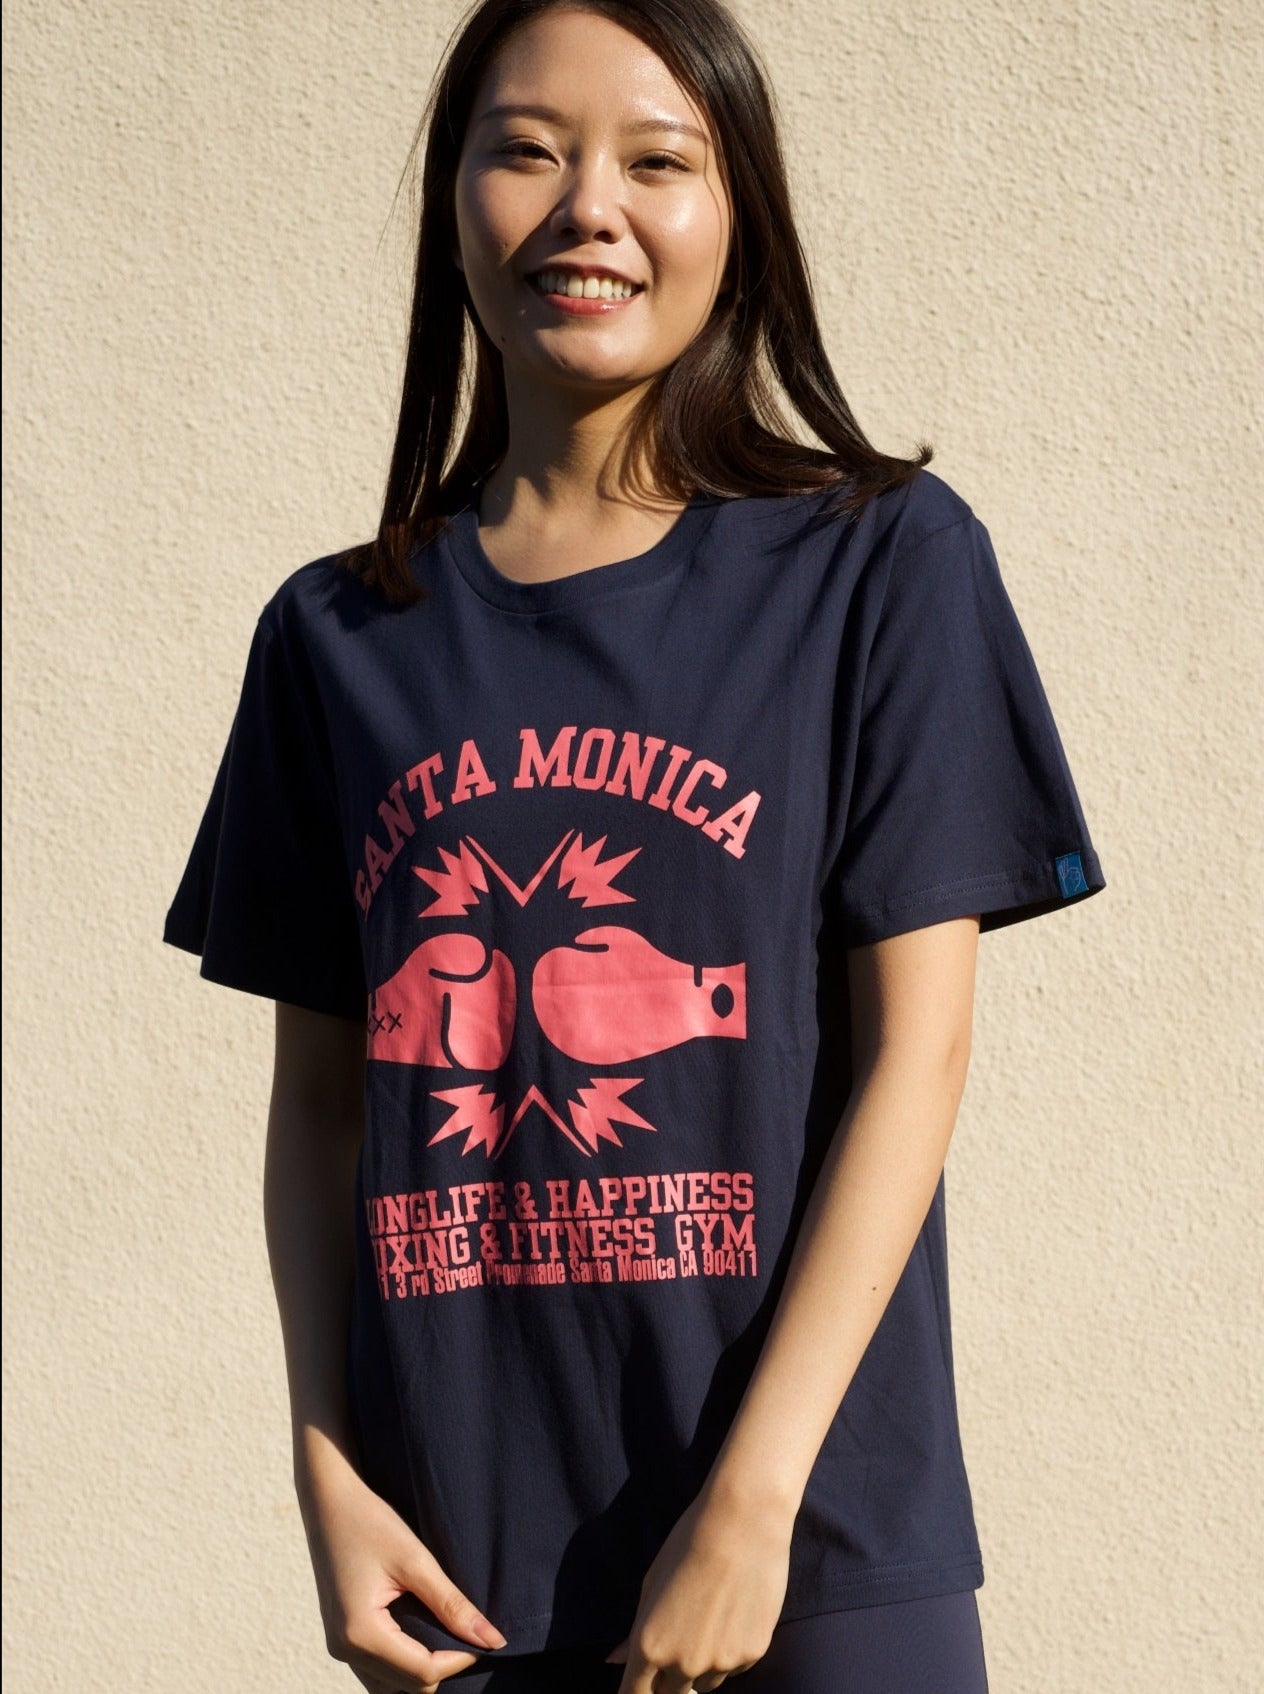 ［Tシャツ］Santa Monica Boxing Gym t-shirts navy